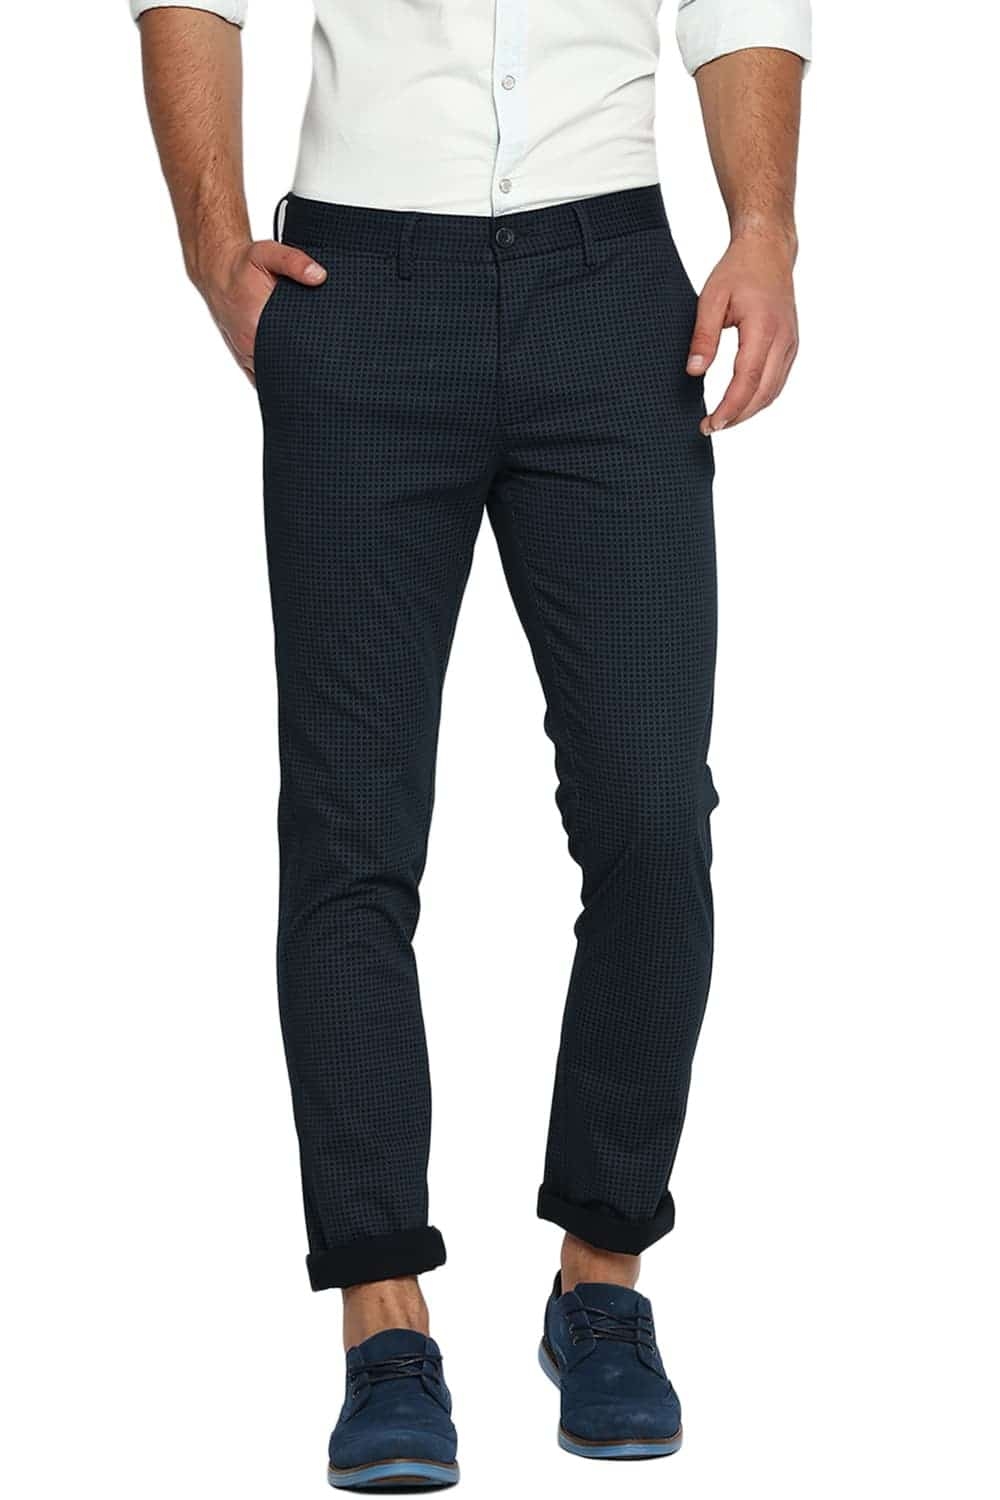 Basics | Basics Tapered Fit Midnight Navy Stretch Trouser